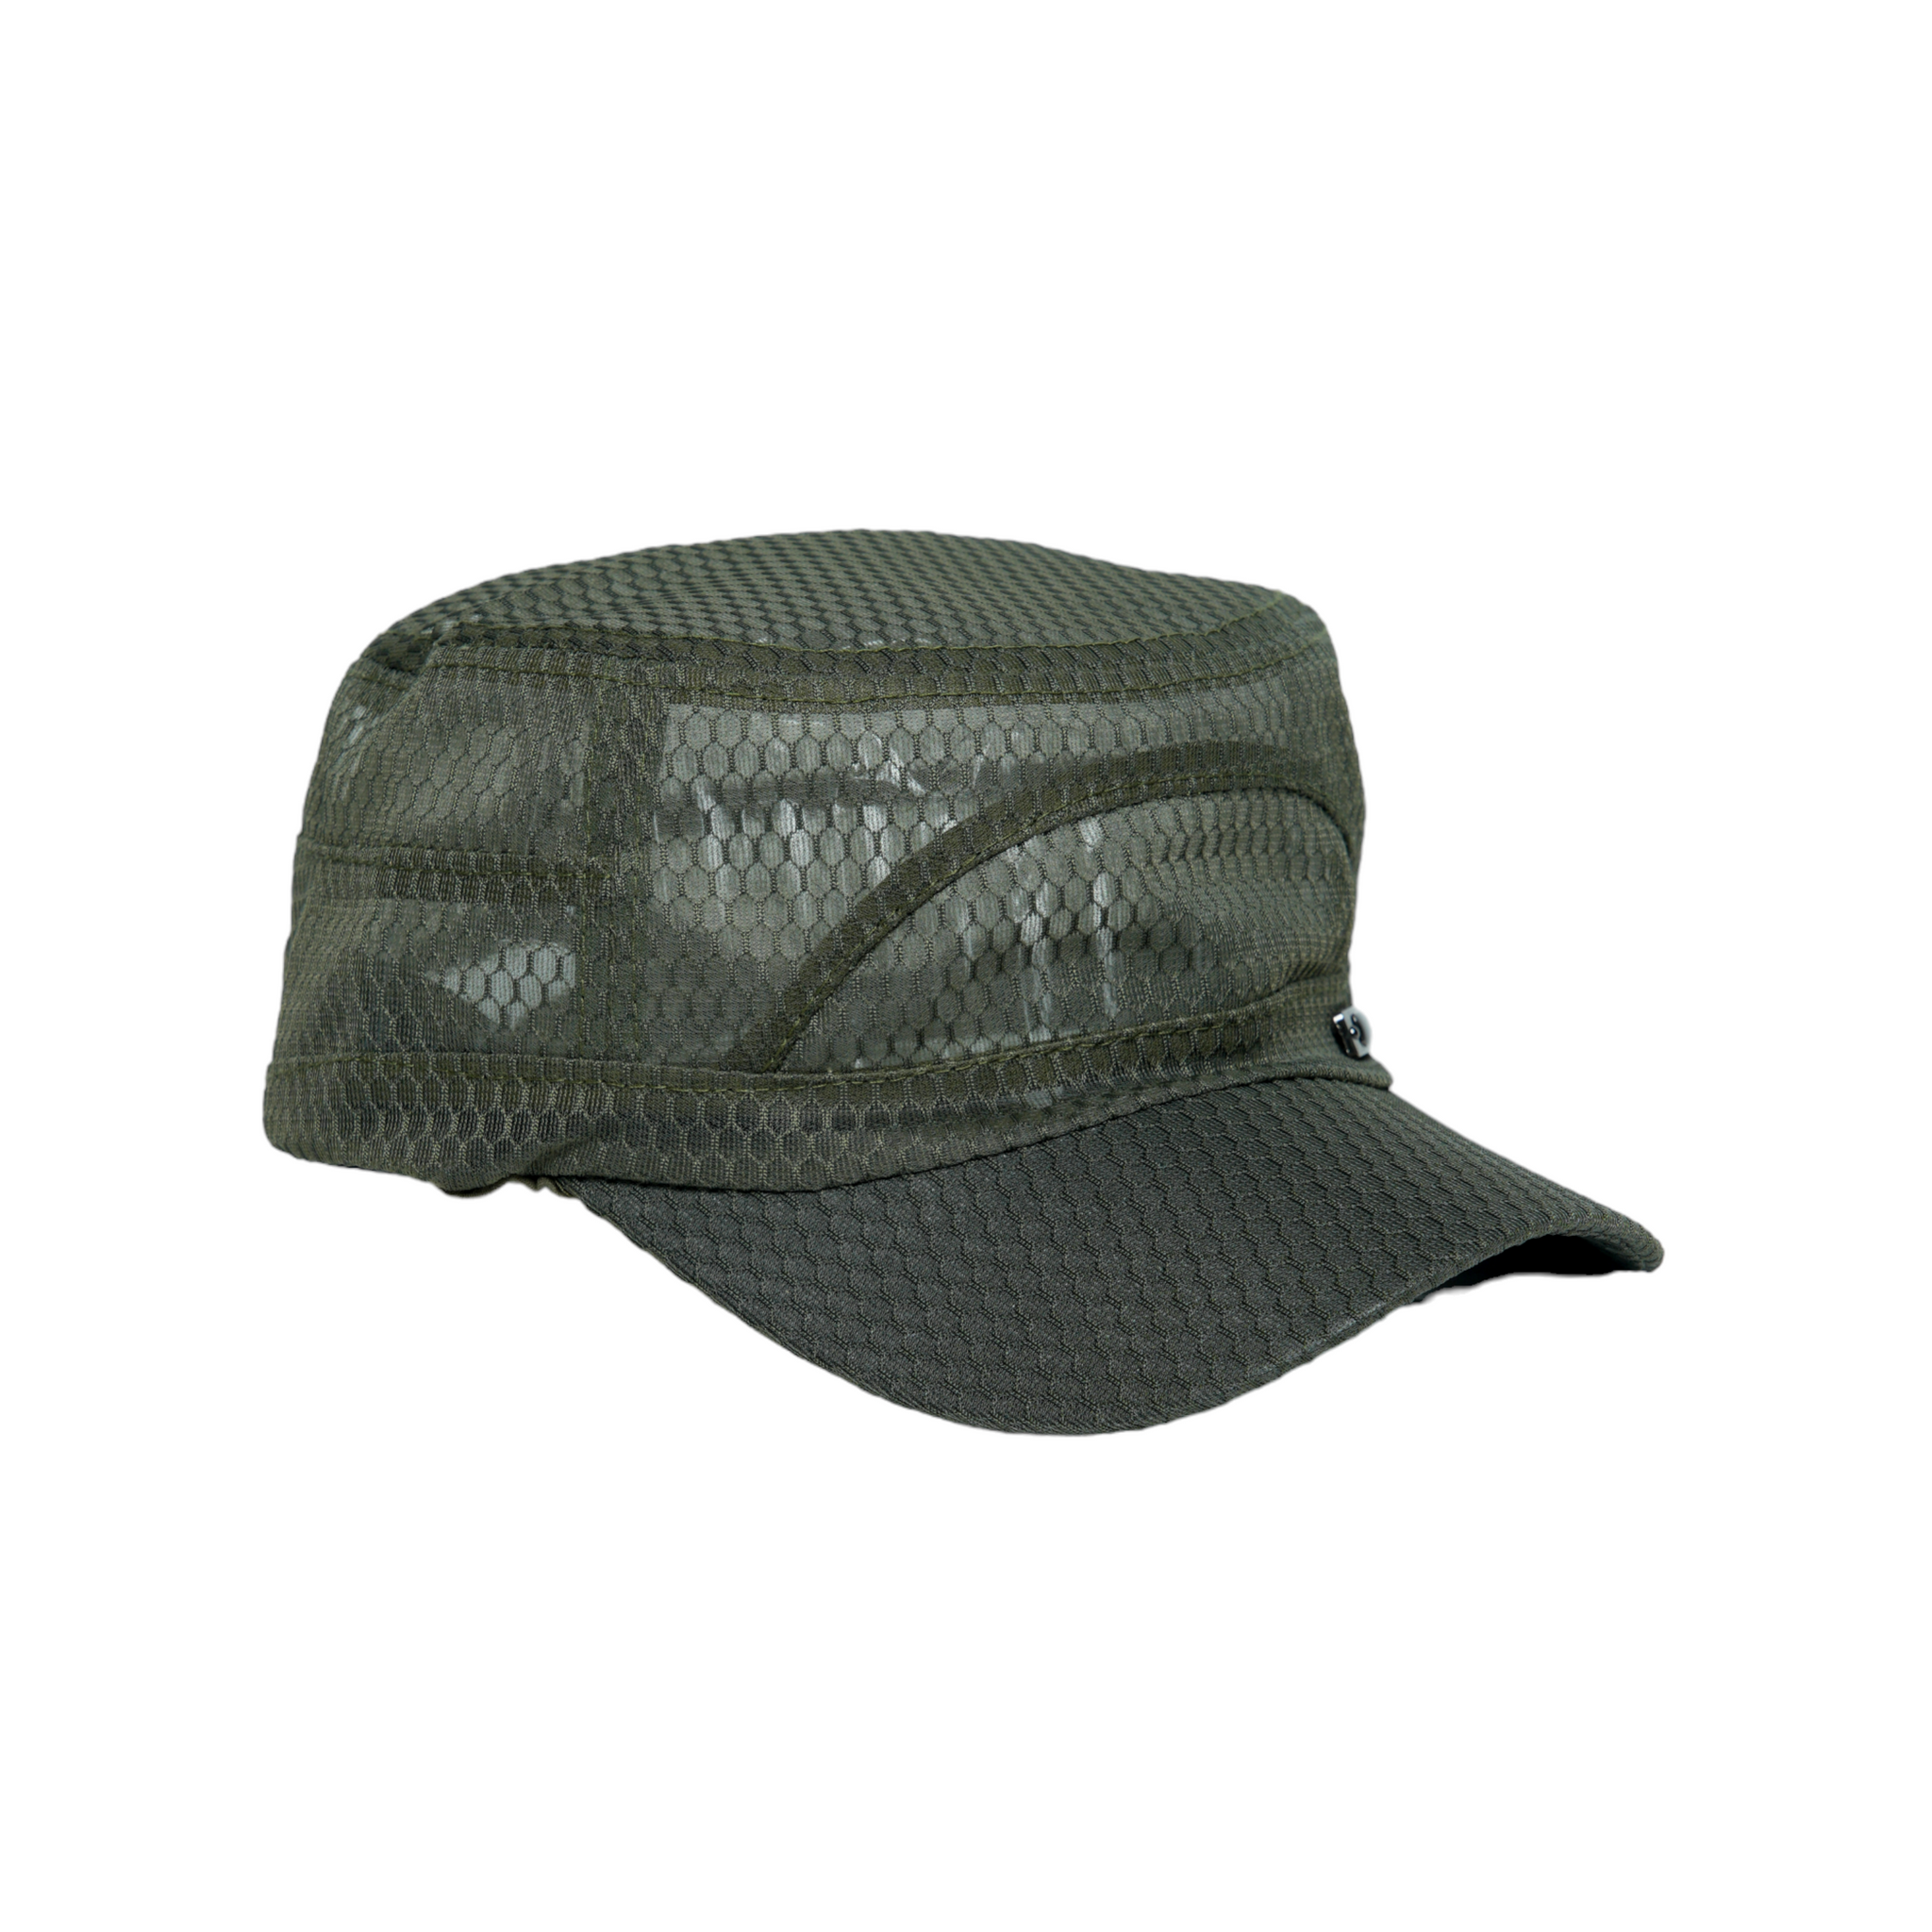 Chokore Summer Flat Top Cap in Mesh Fabric (Army Green)